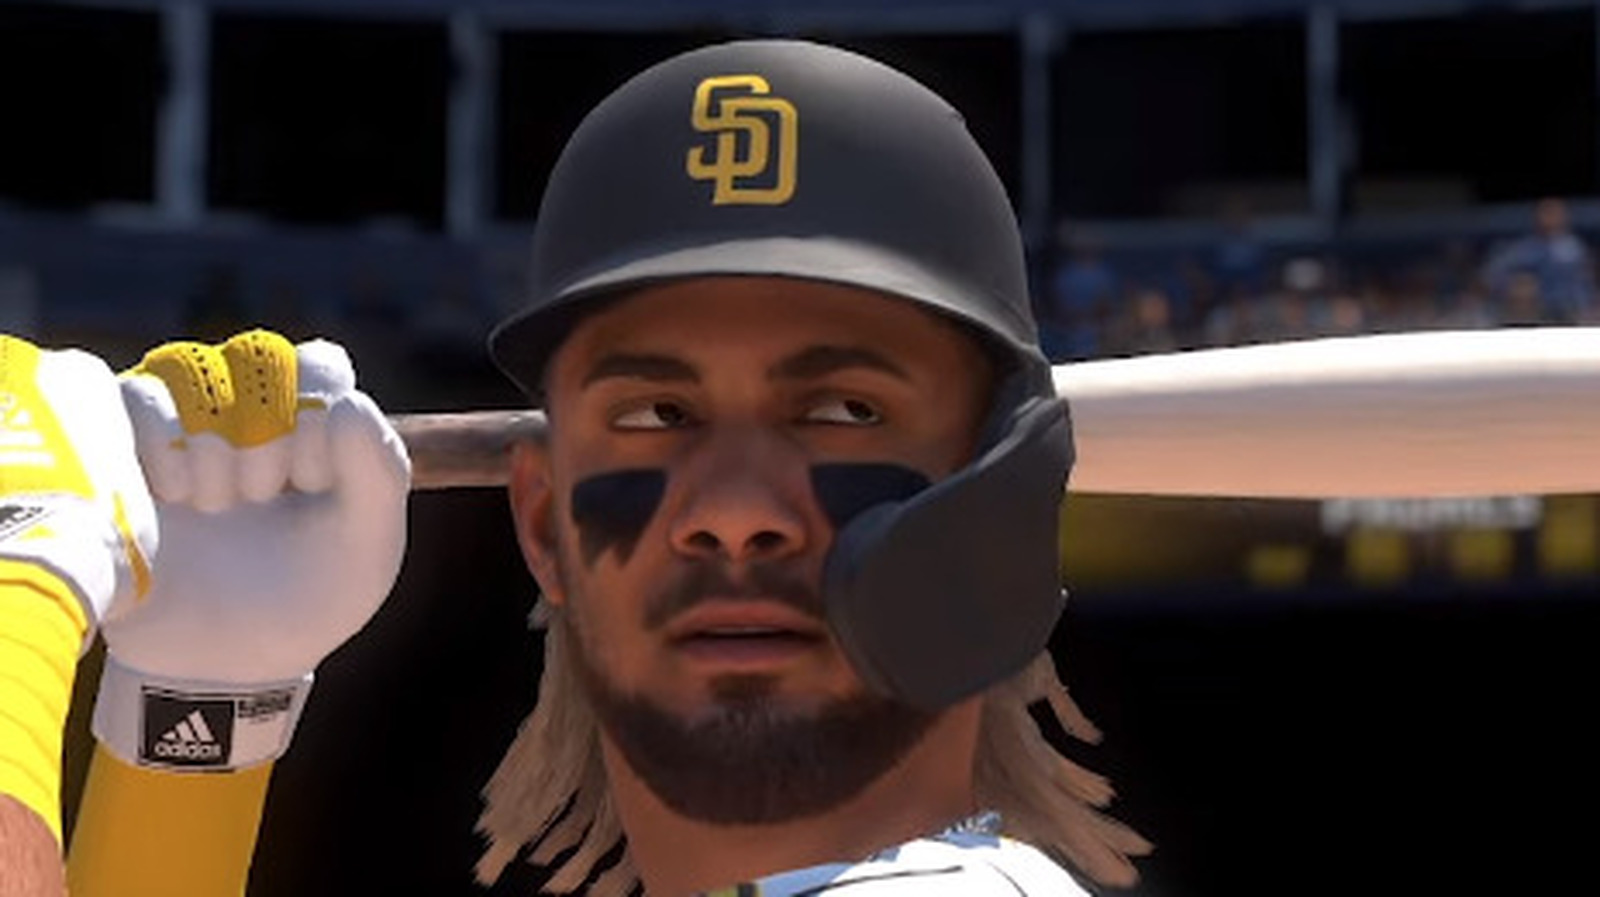 Fernando Tatis Jr. cover athlete for video game MLB The Show 21